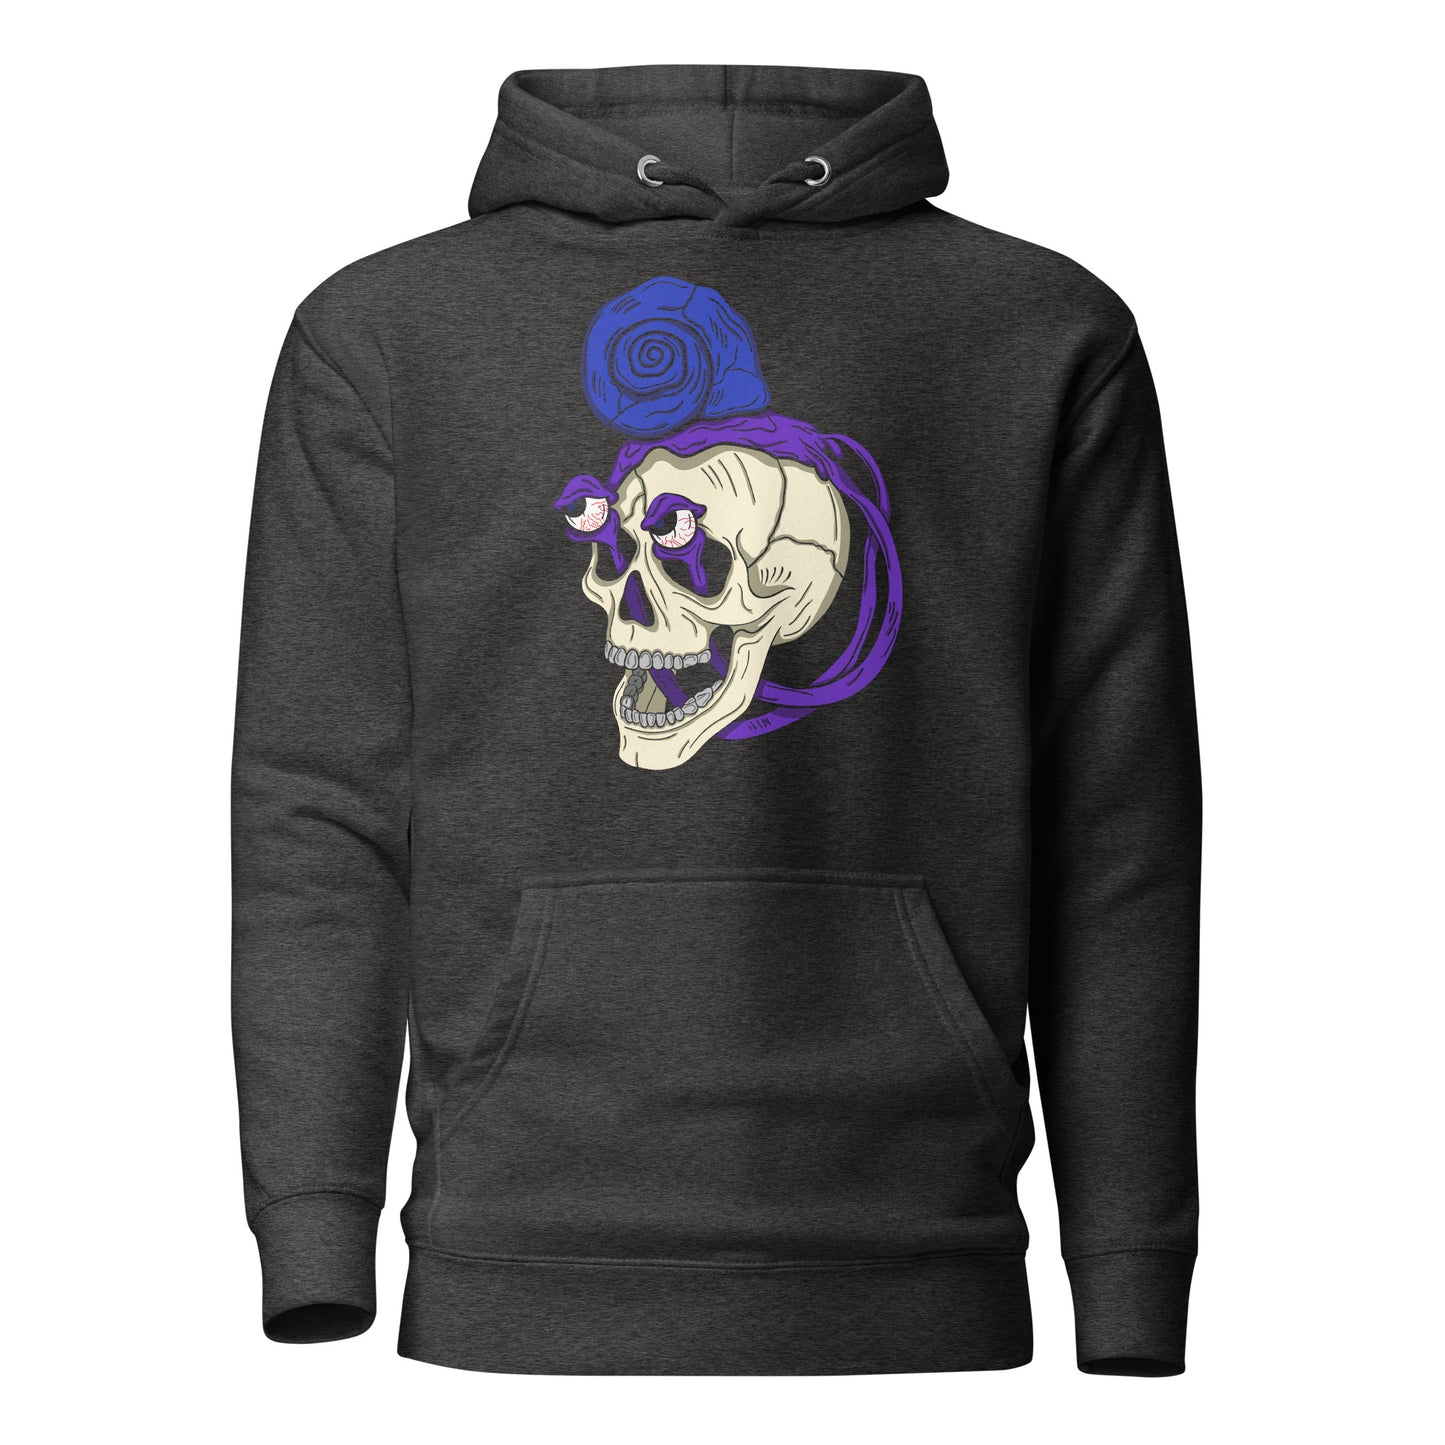 Snail Skull - Premium Unisex Hoodie - Design on the Front